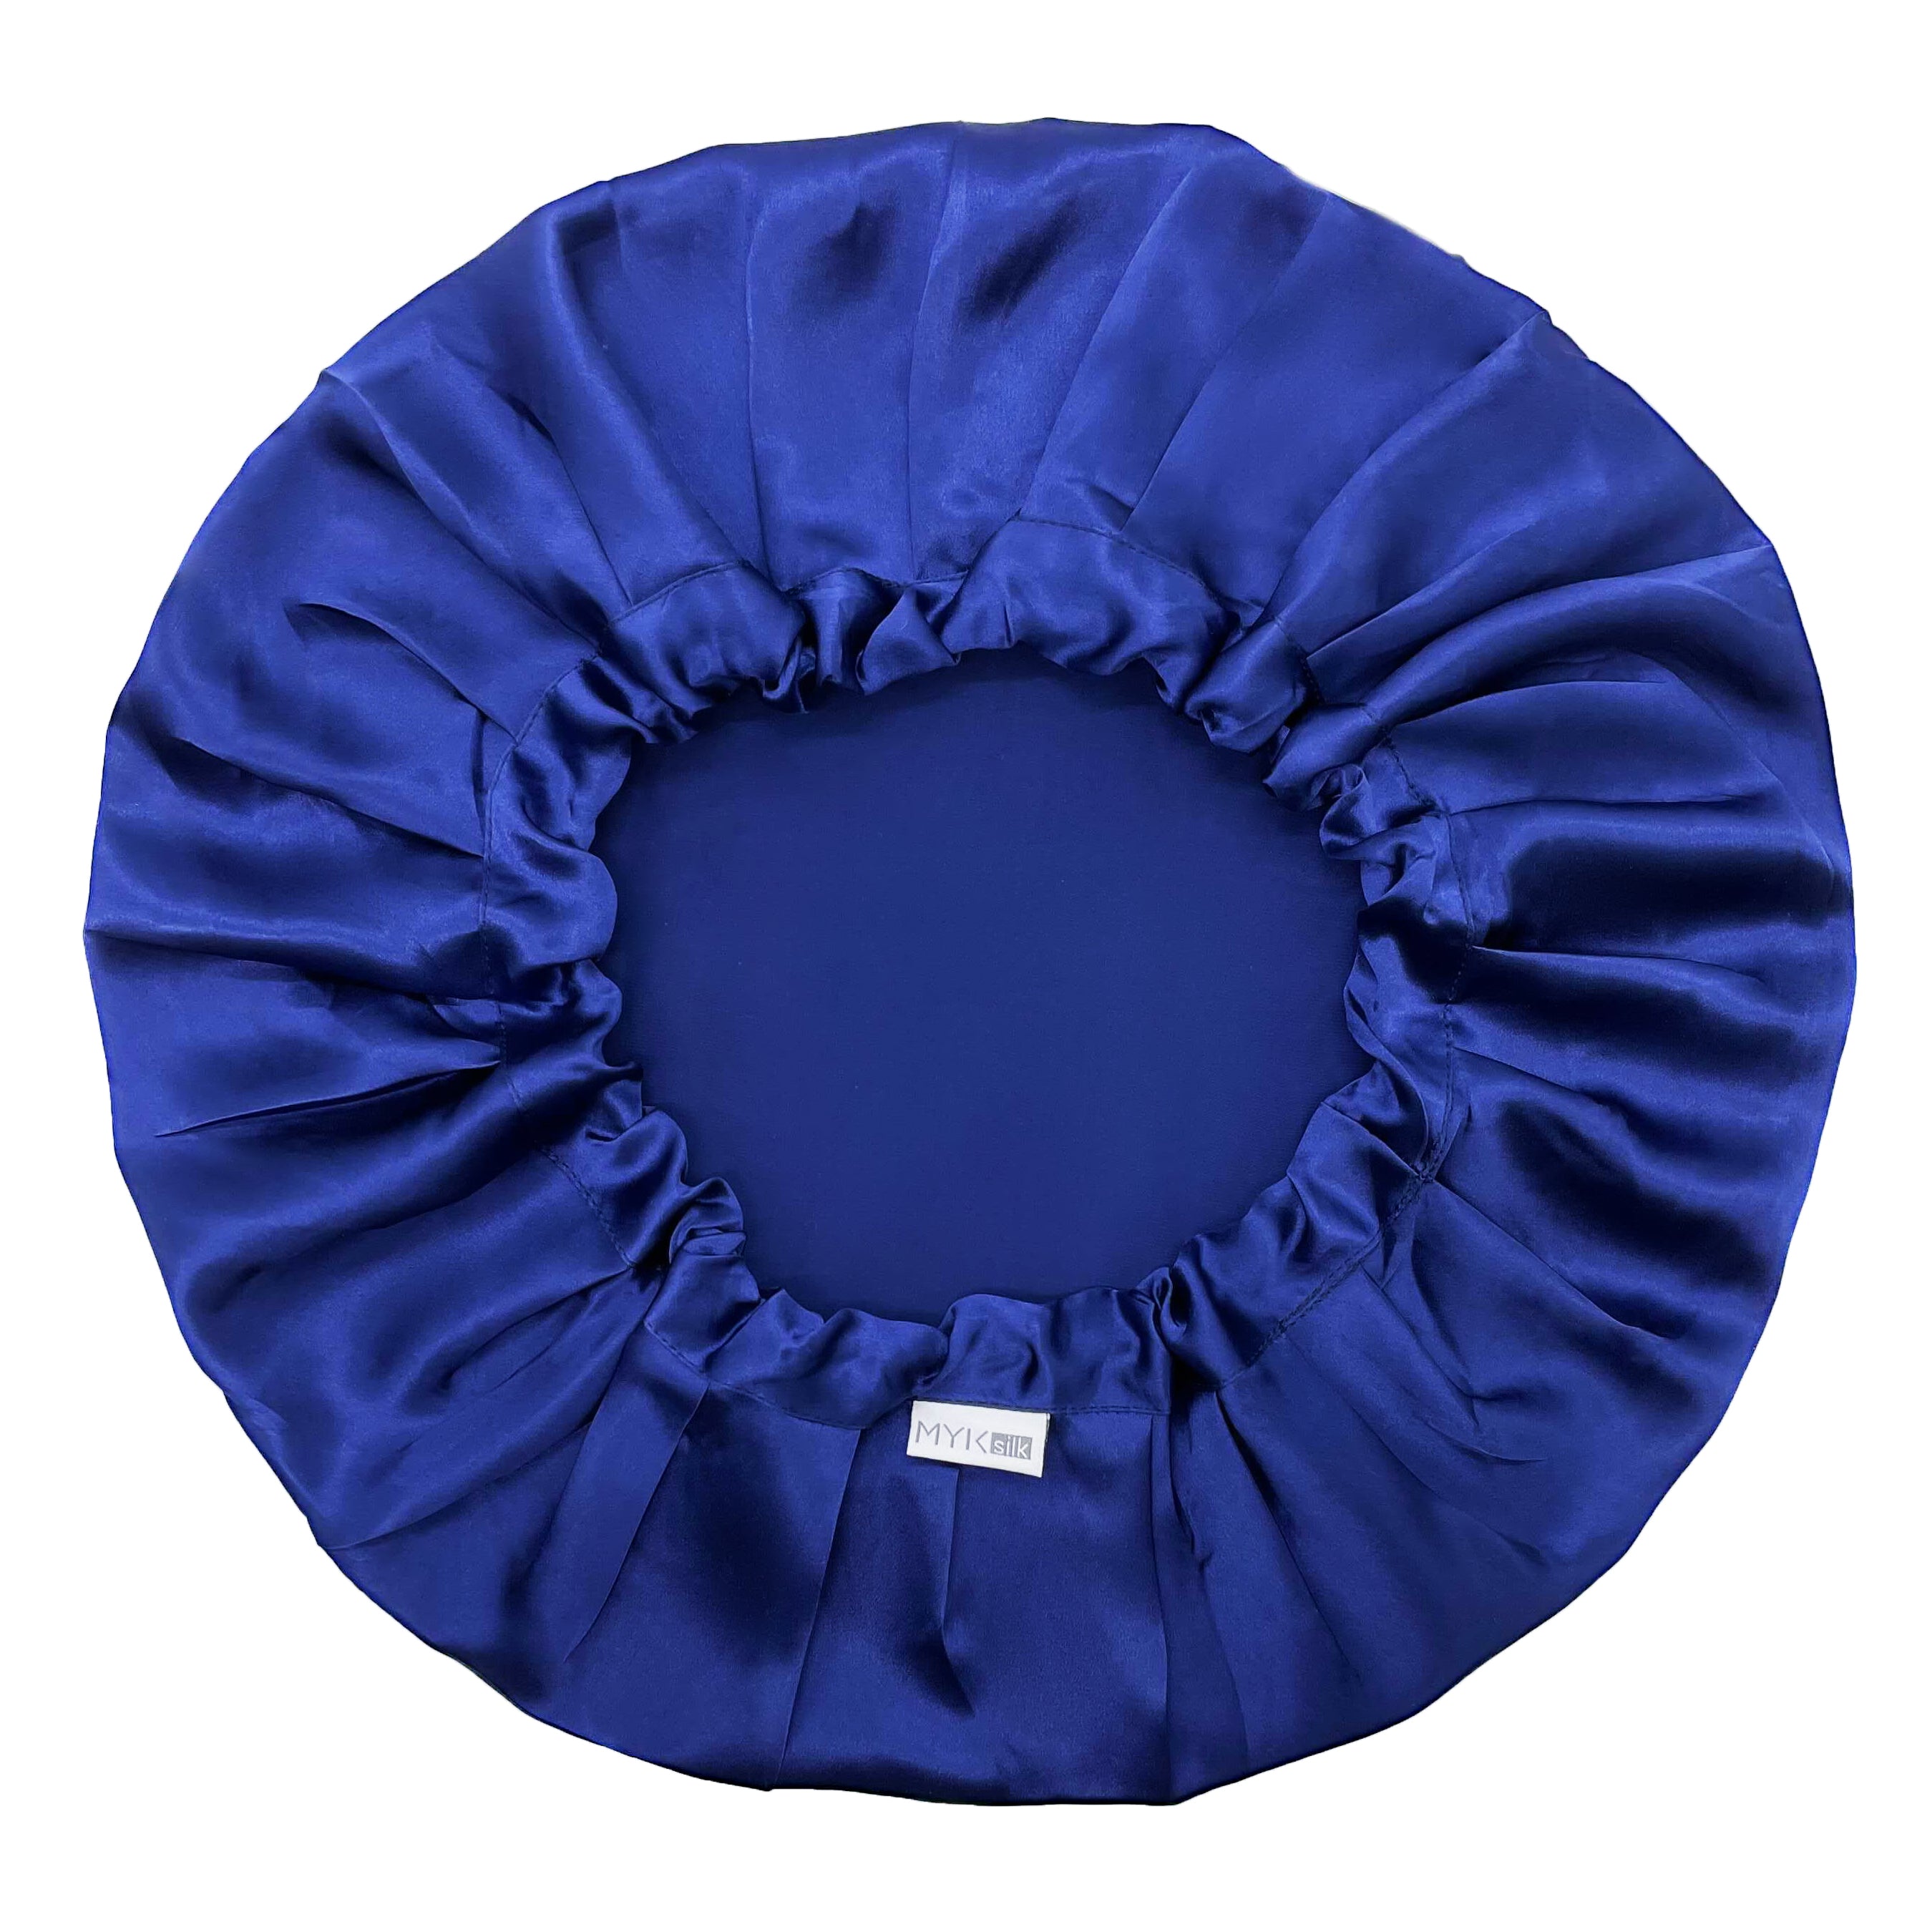 Silk Night Sleeping Cap Bonnet with Comfort Elastic Band - MYK Silk #color_navy blue